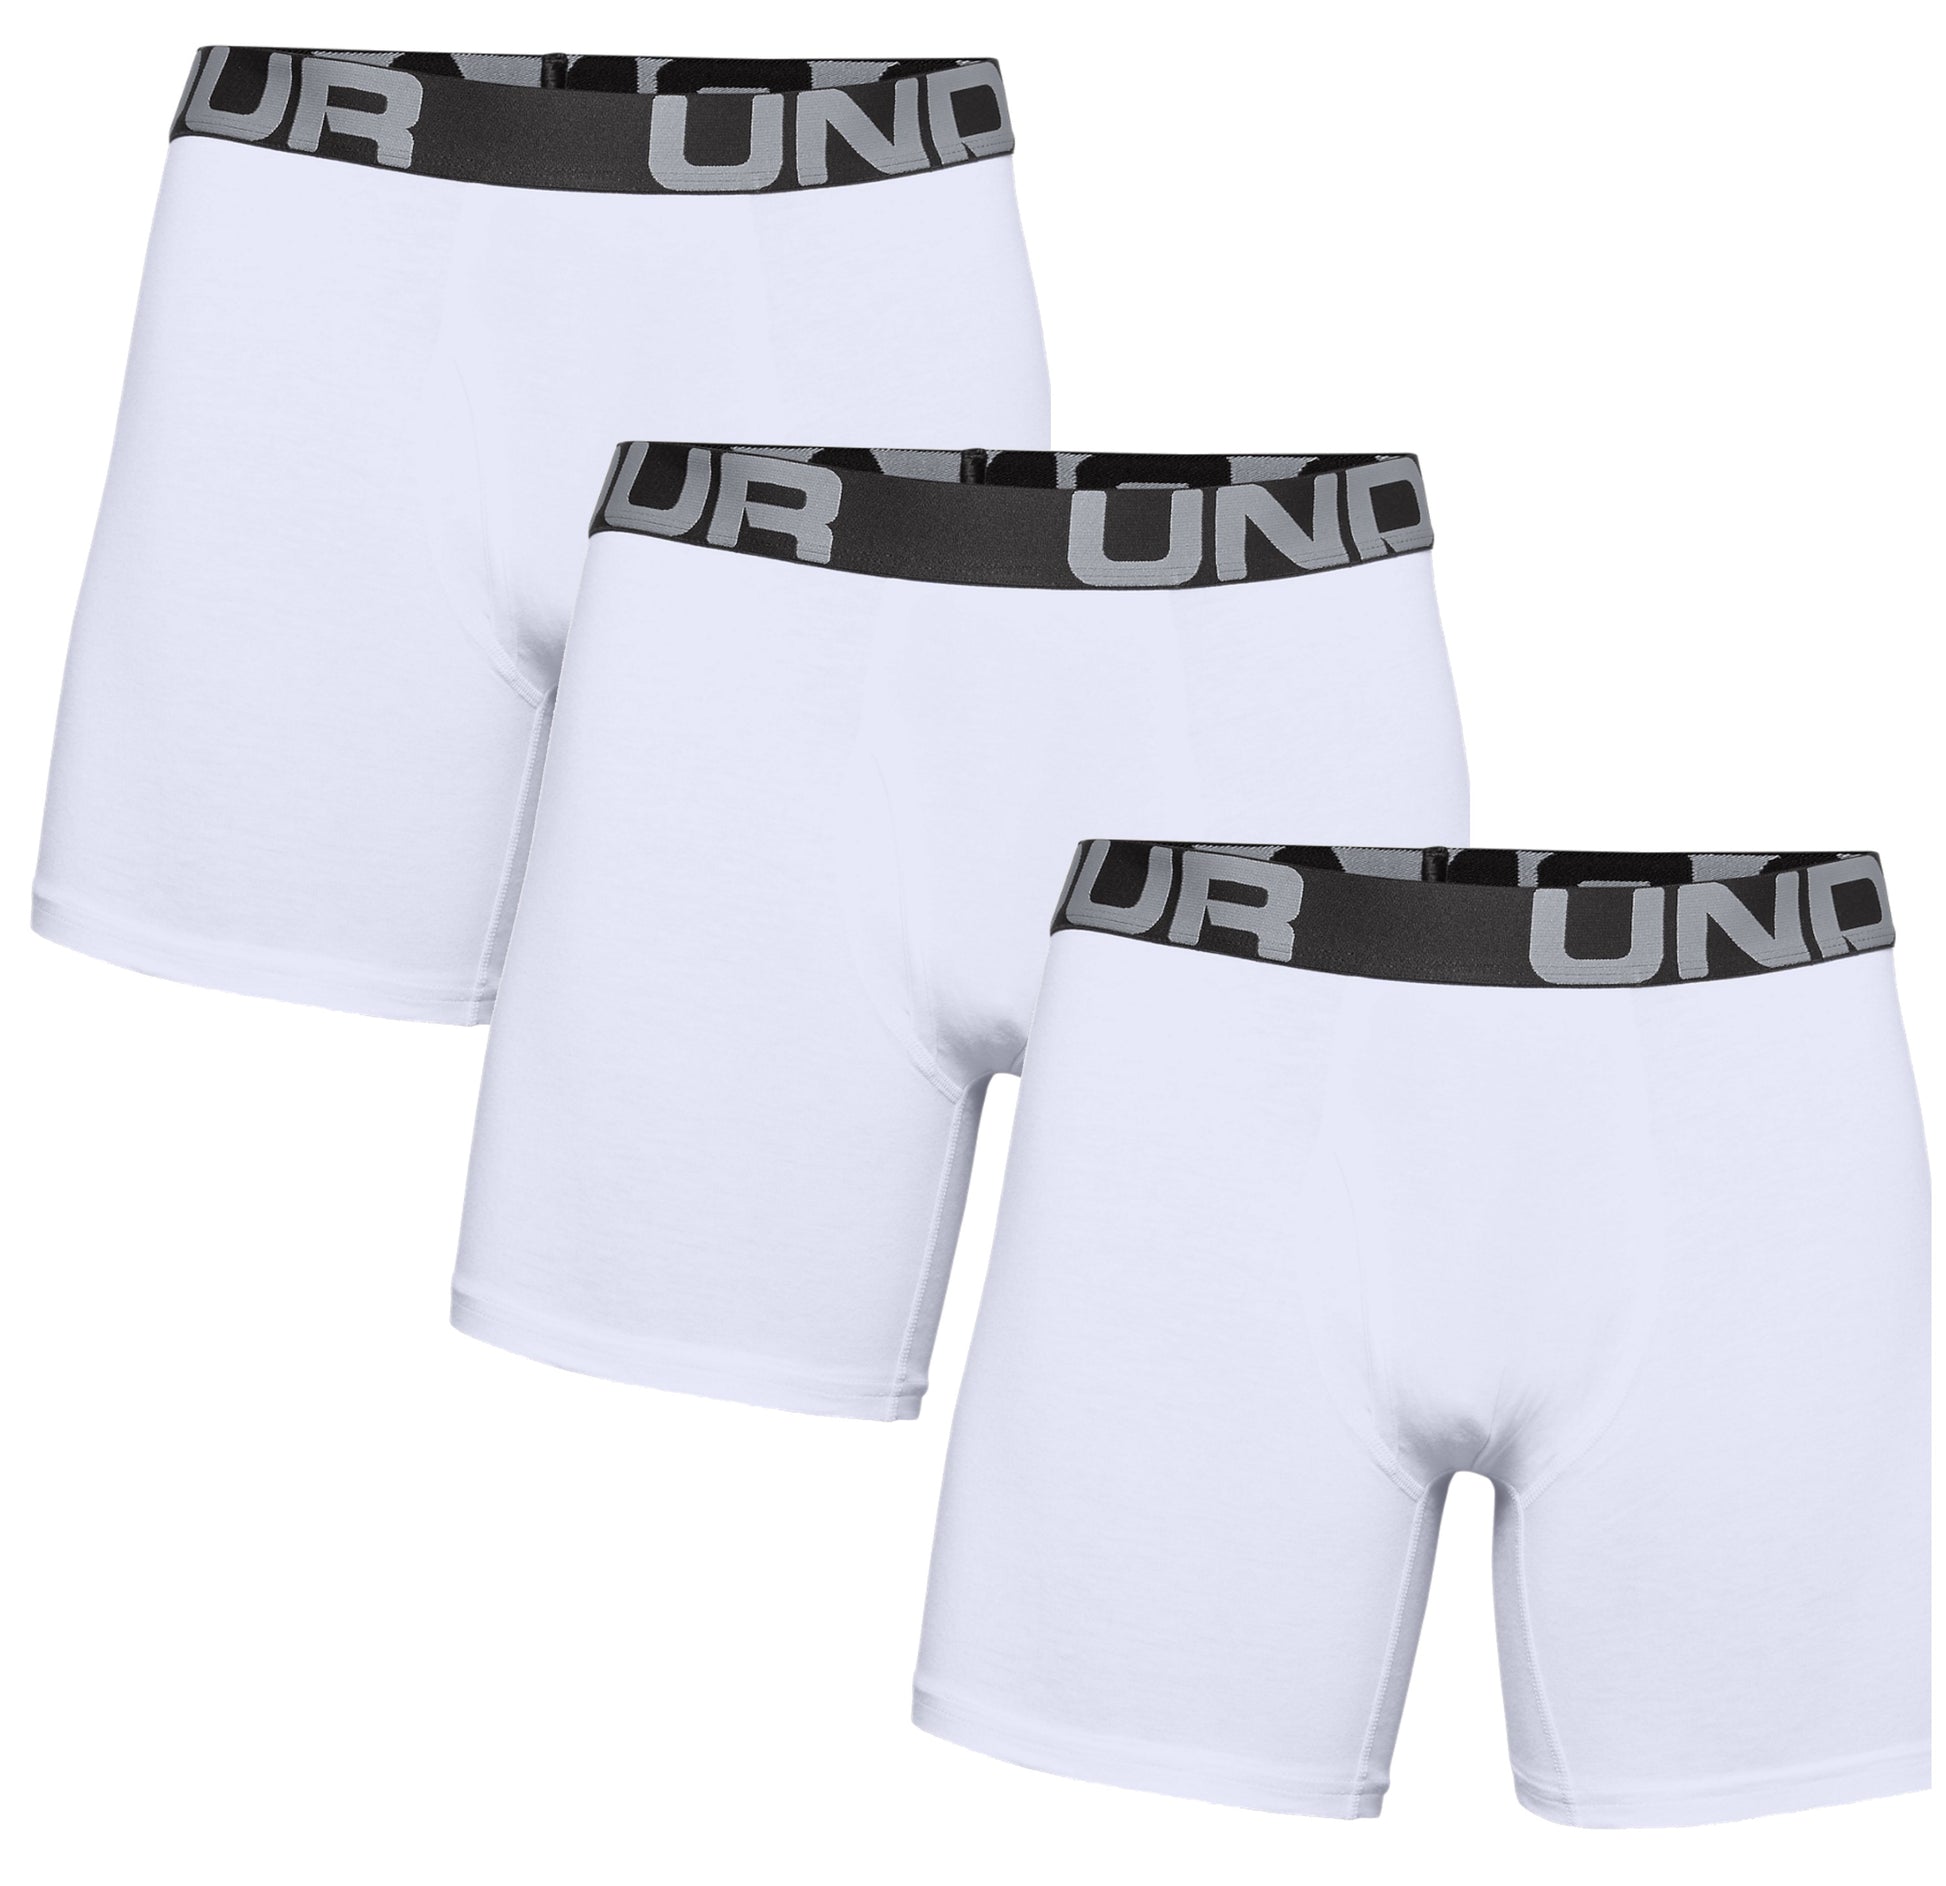 Under Armour Boxerjock Charged Cotton 3Pack Underwear 6” Men's Medium New  In Box